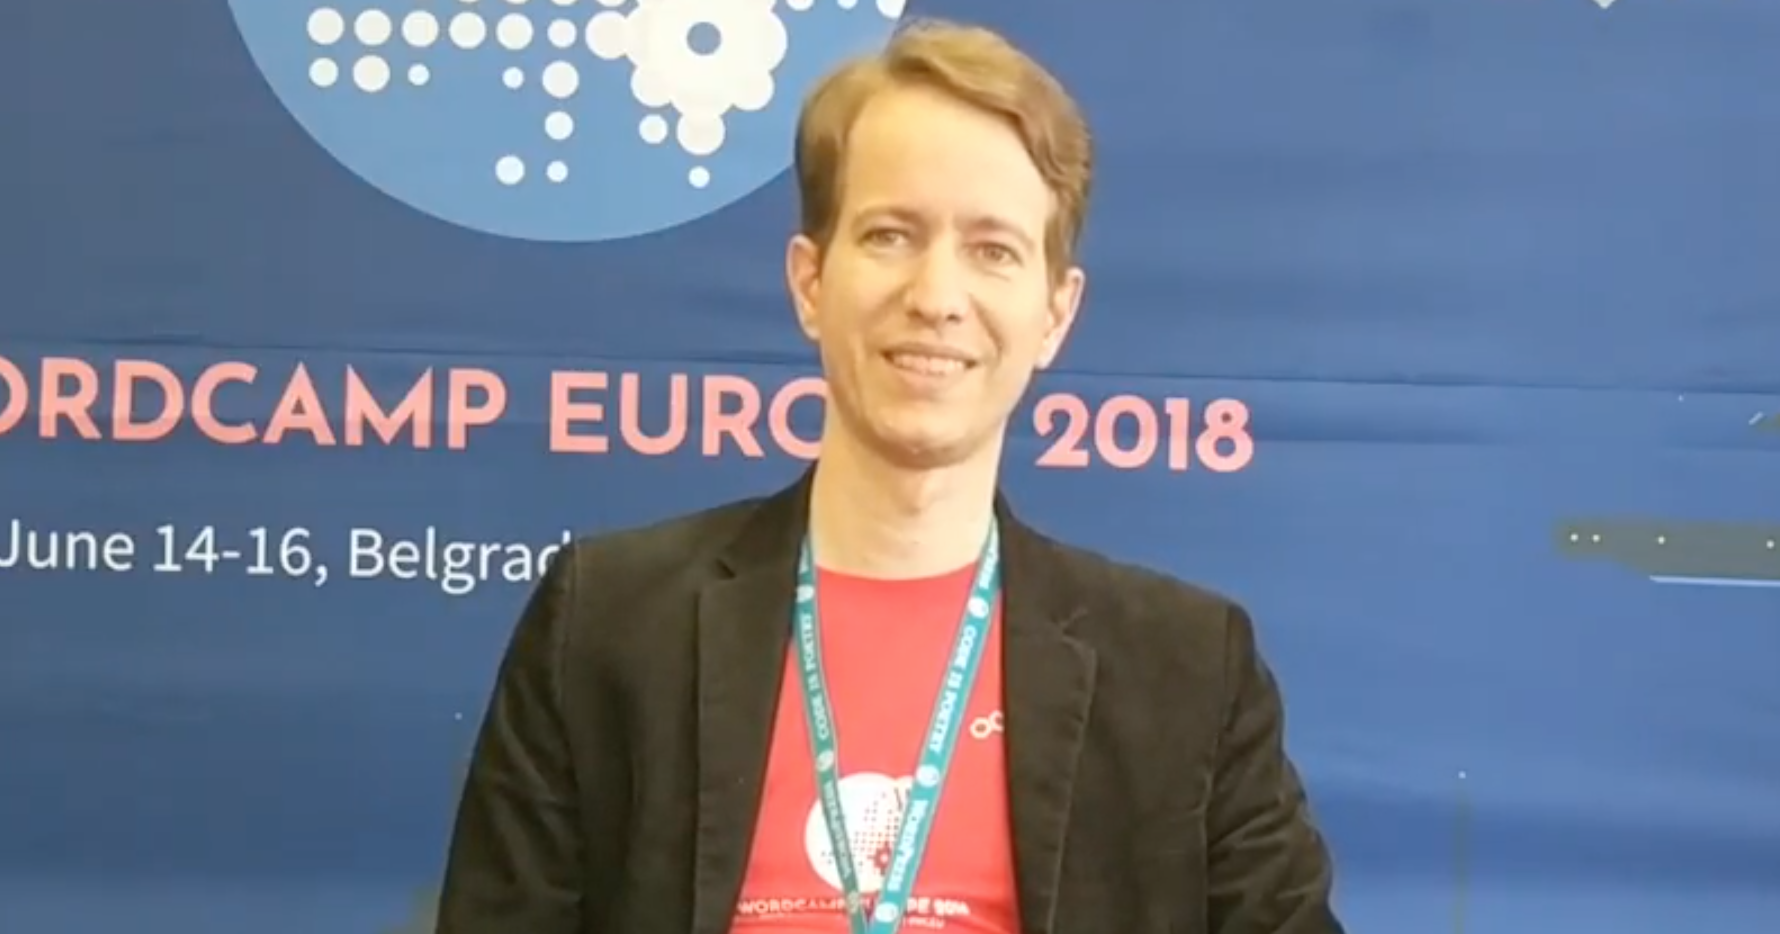 Meet Bernhard Kau, Local Lead Organizer of WordCamp Europe 2019 in Berlin